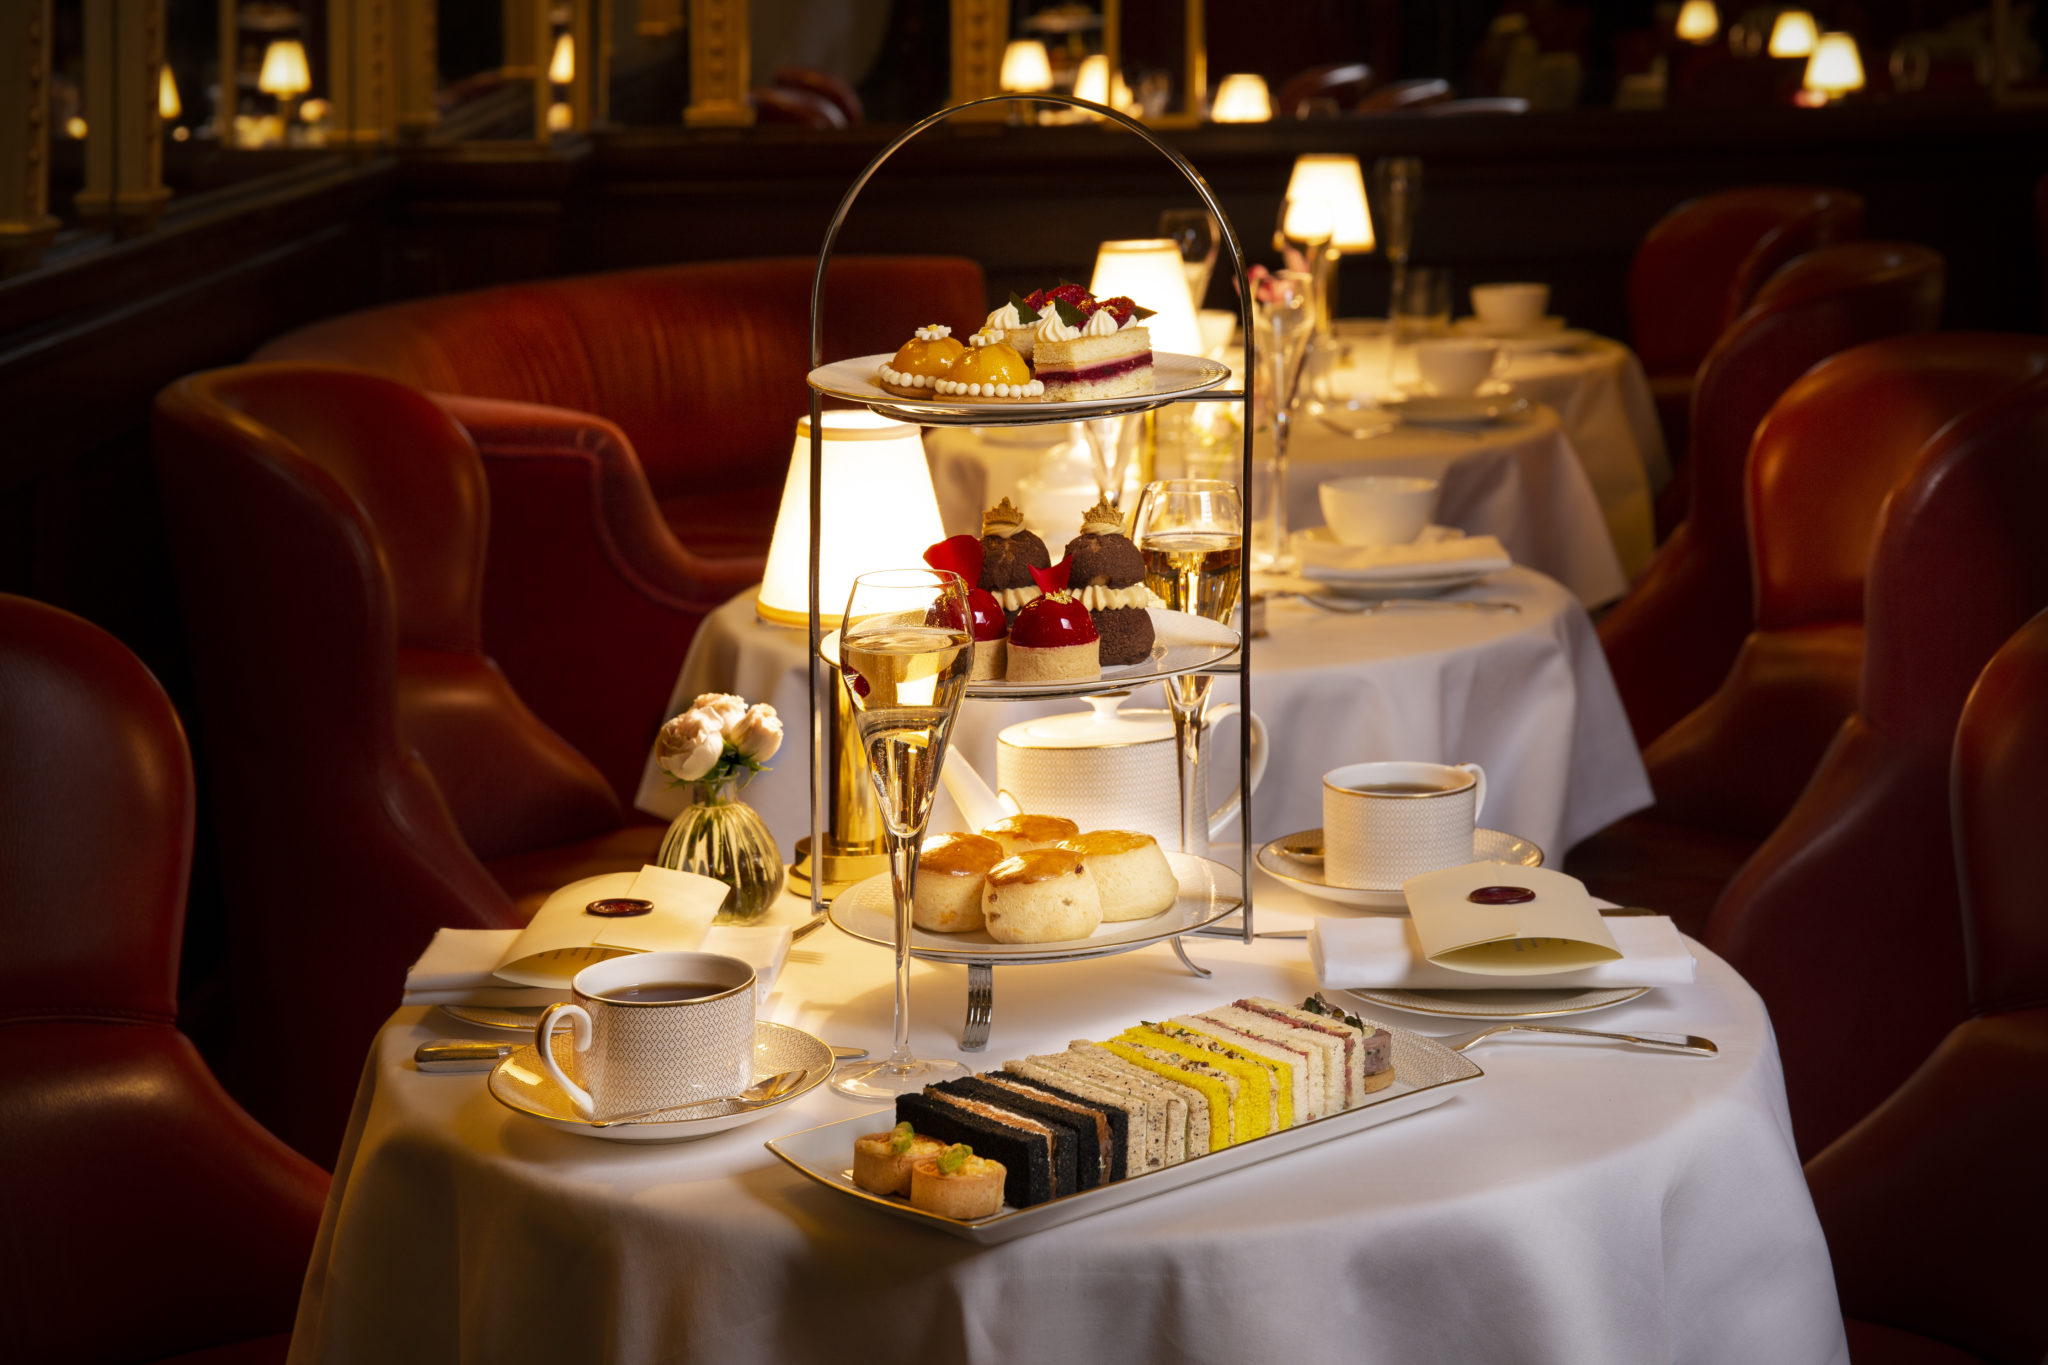 Afternoon Tea at Hotel Cafe Royal, London